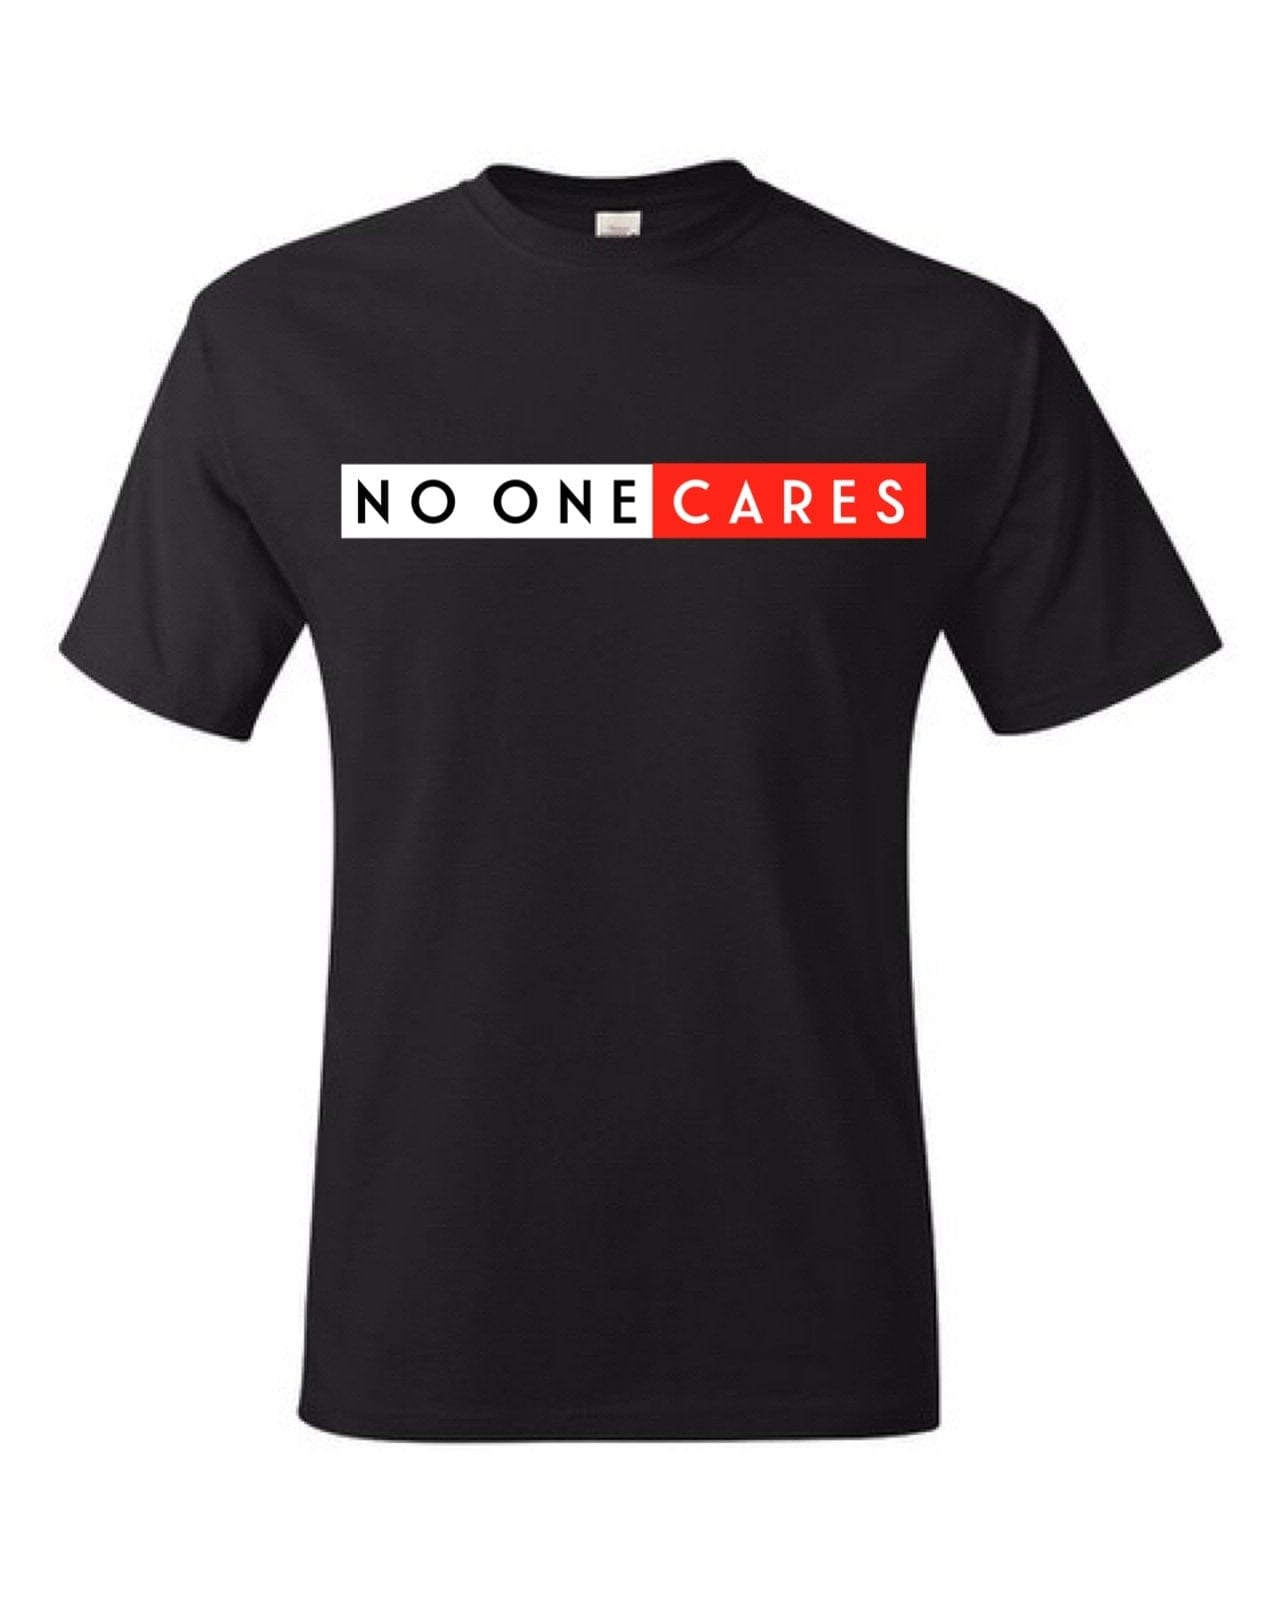 InsensitiviTees Shirts S / Black No One Cares